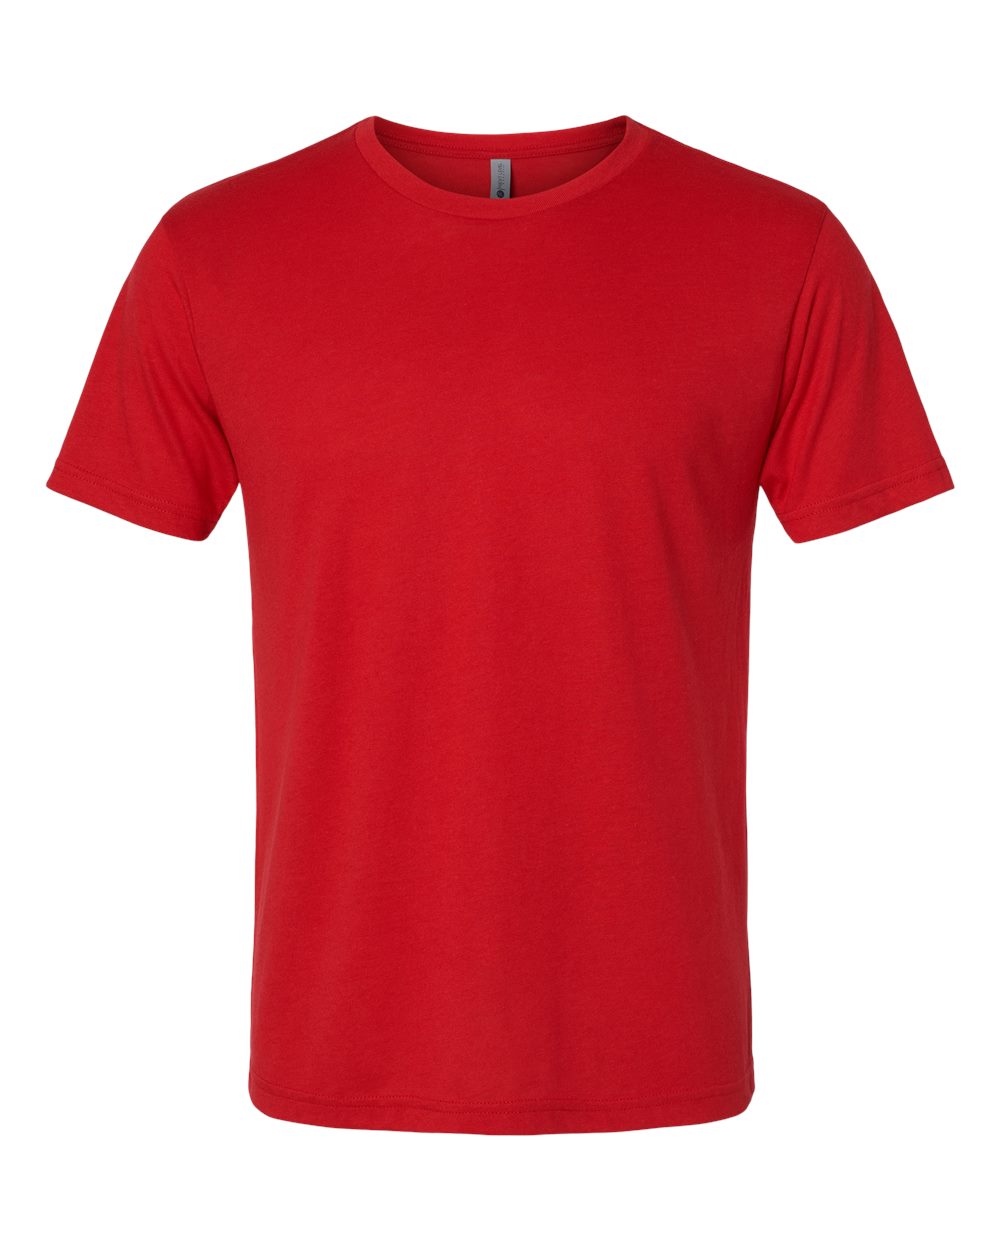 Next Level Unisex Cotton Ringer T-Shirt Natural/Forest Green M